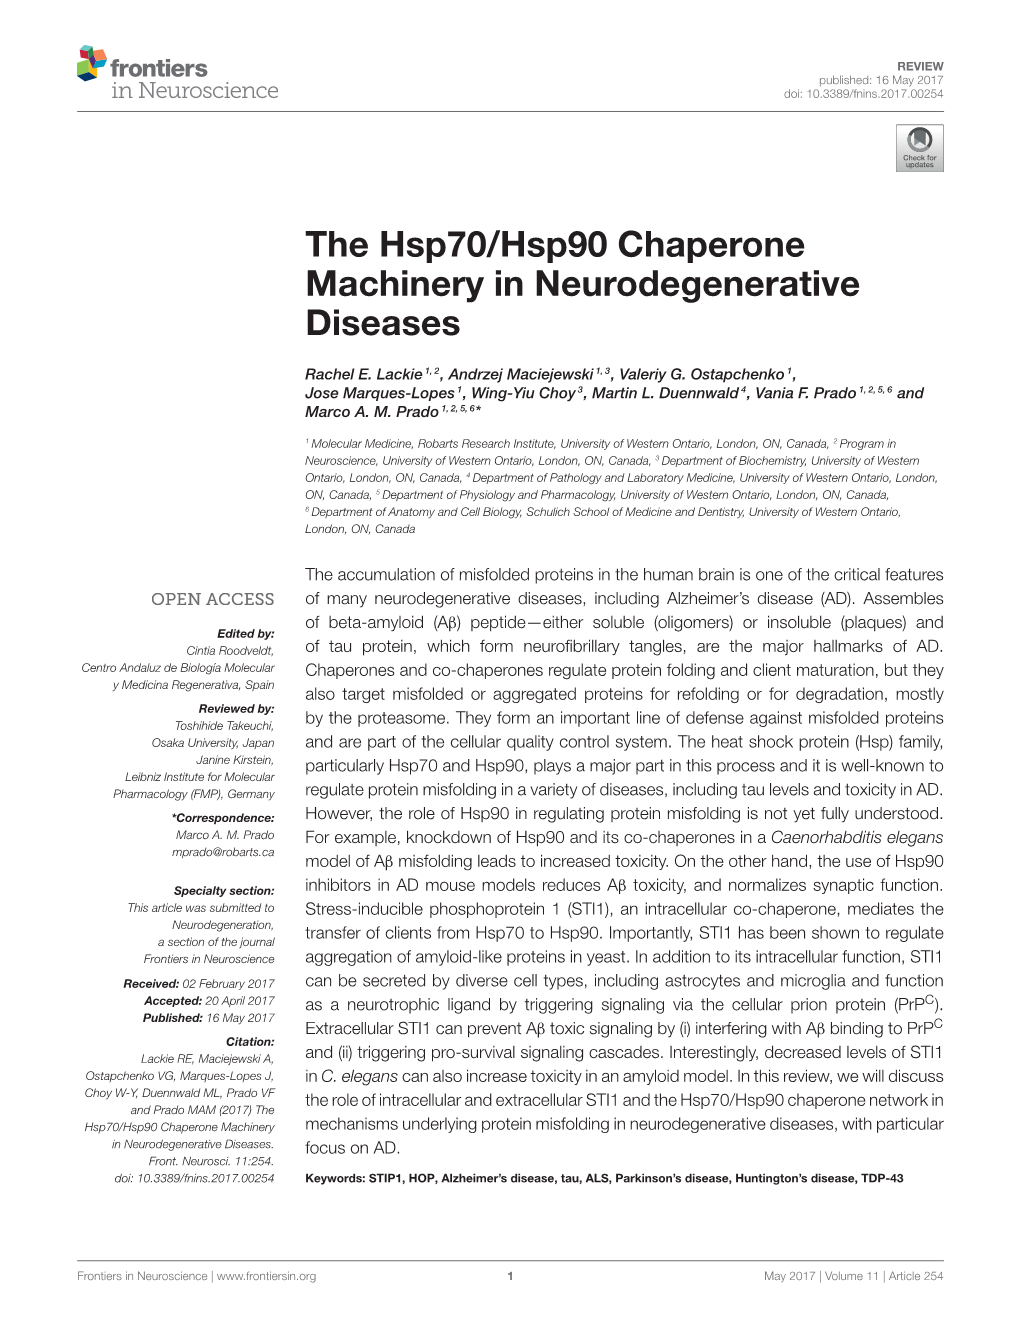 The Hsp70/Hsp90 Chaperone Machinery in Neurodegenerative Diseases